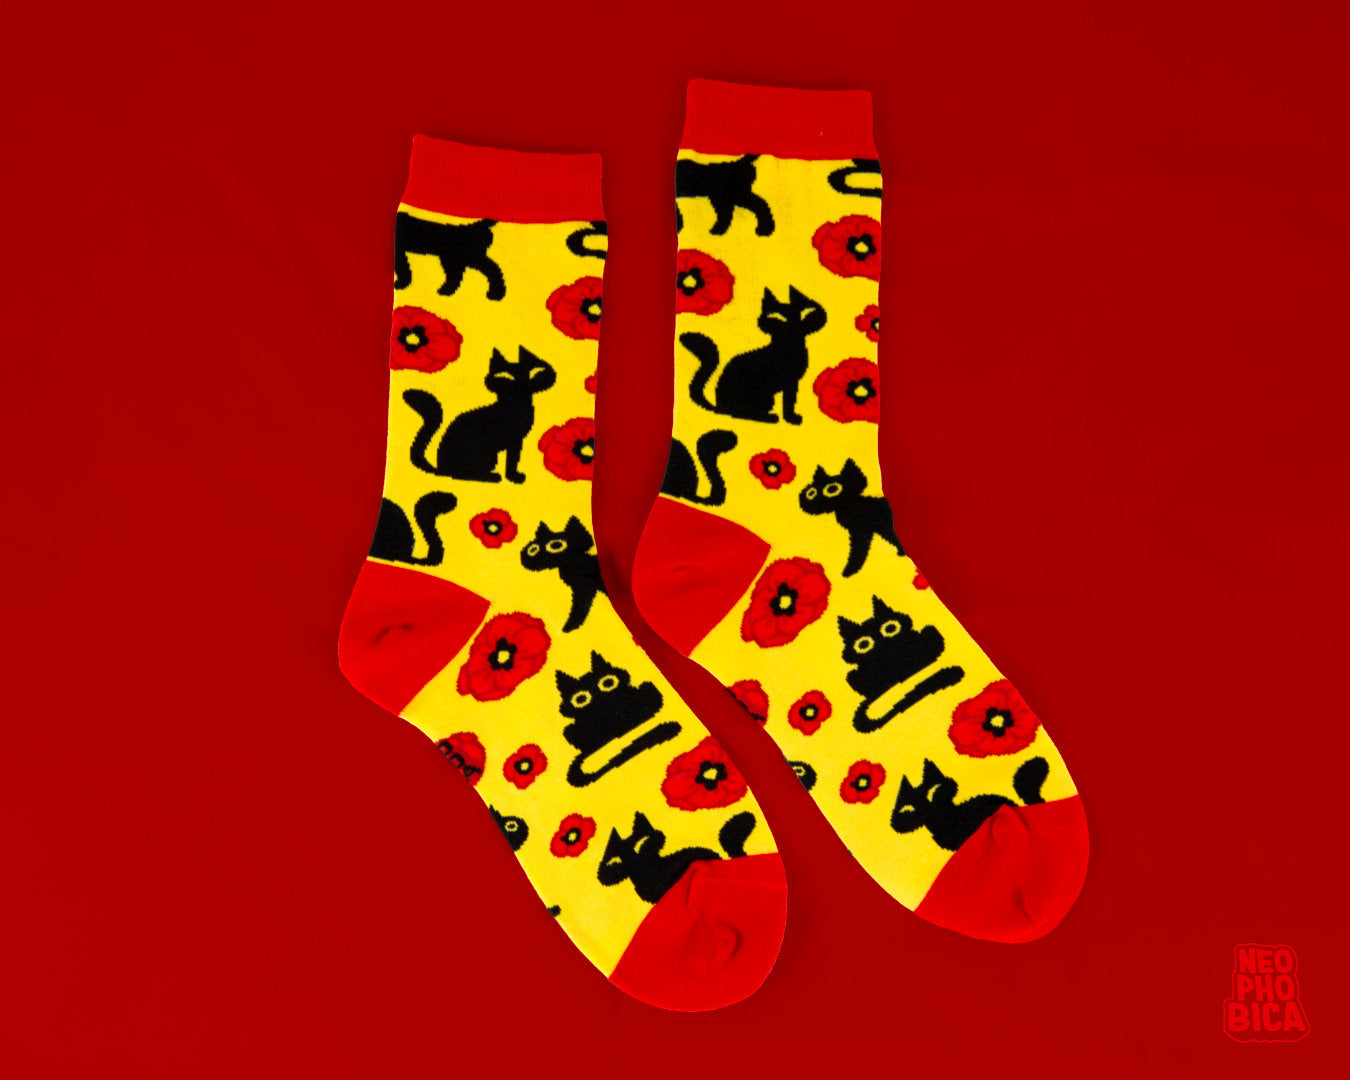 Poppy Voids - Socks